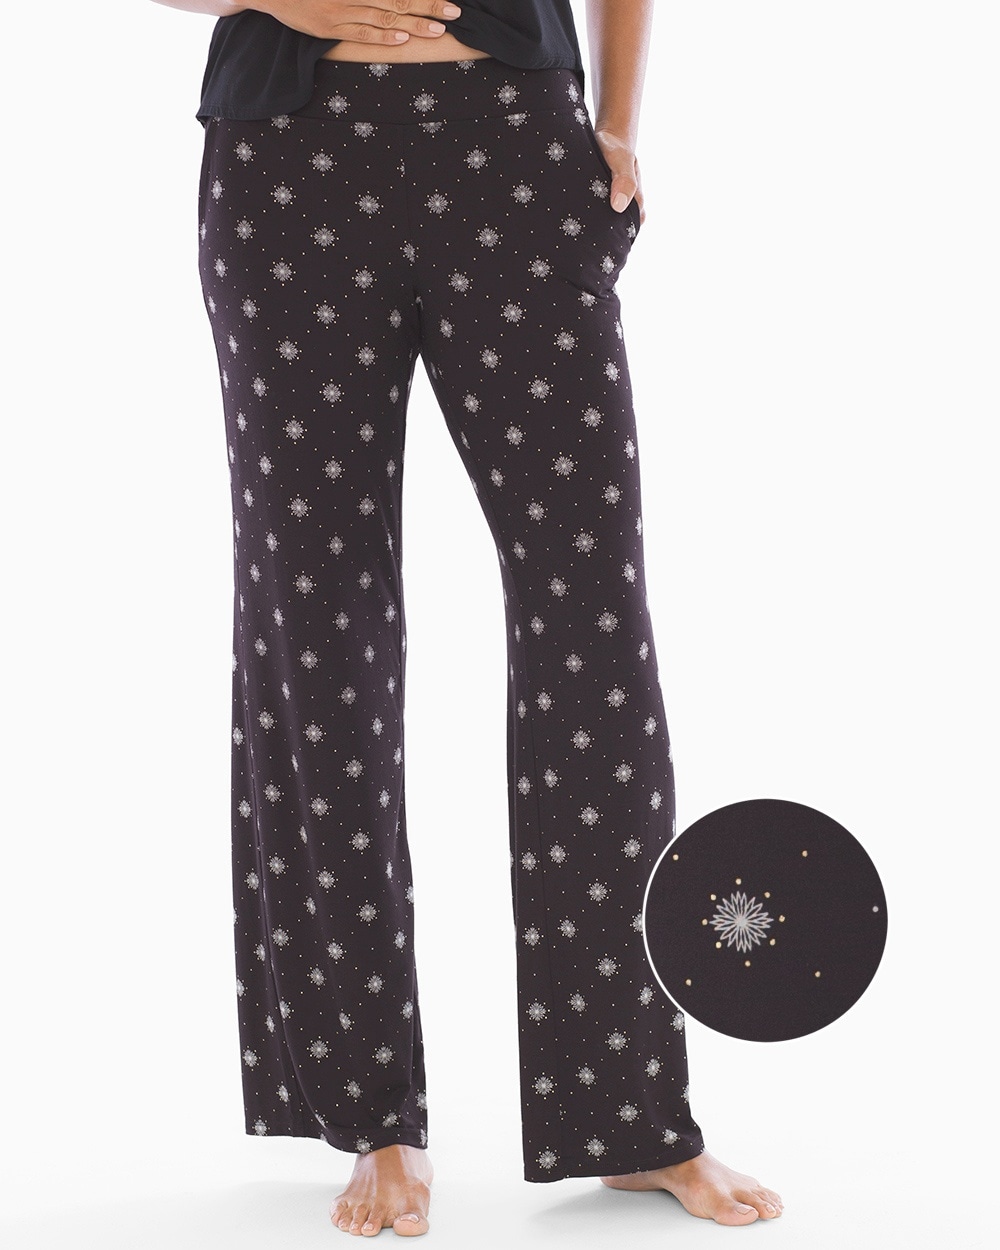 Cool Nights Pajama Pants Snowflakes Black